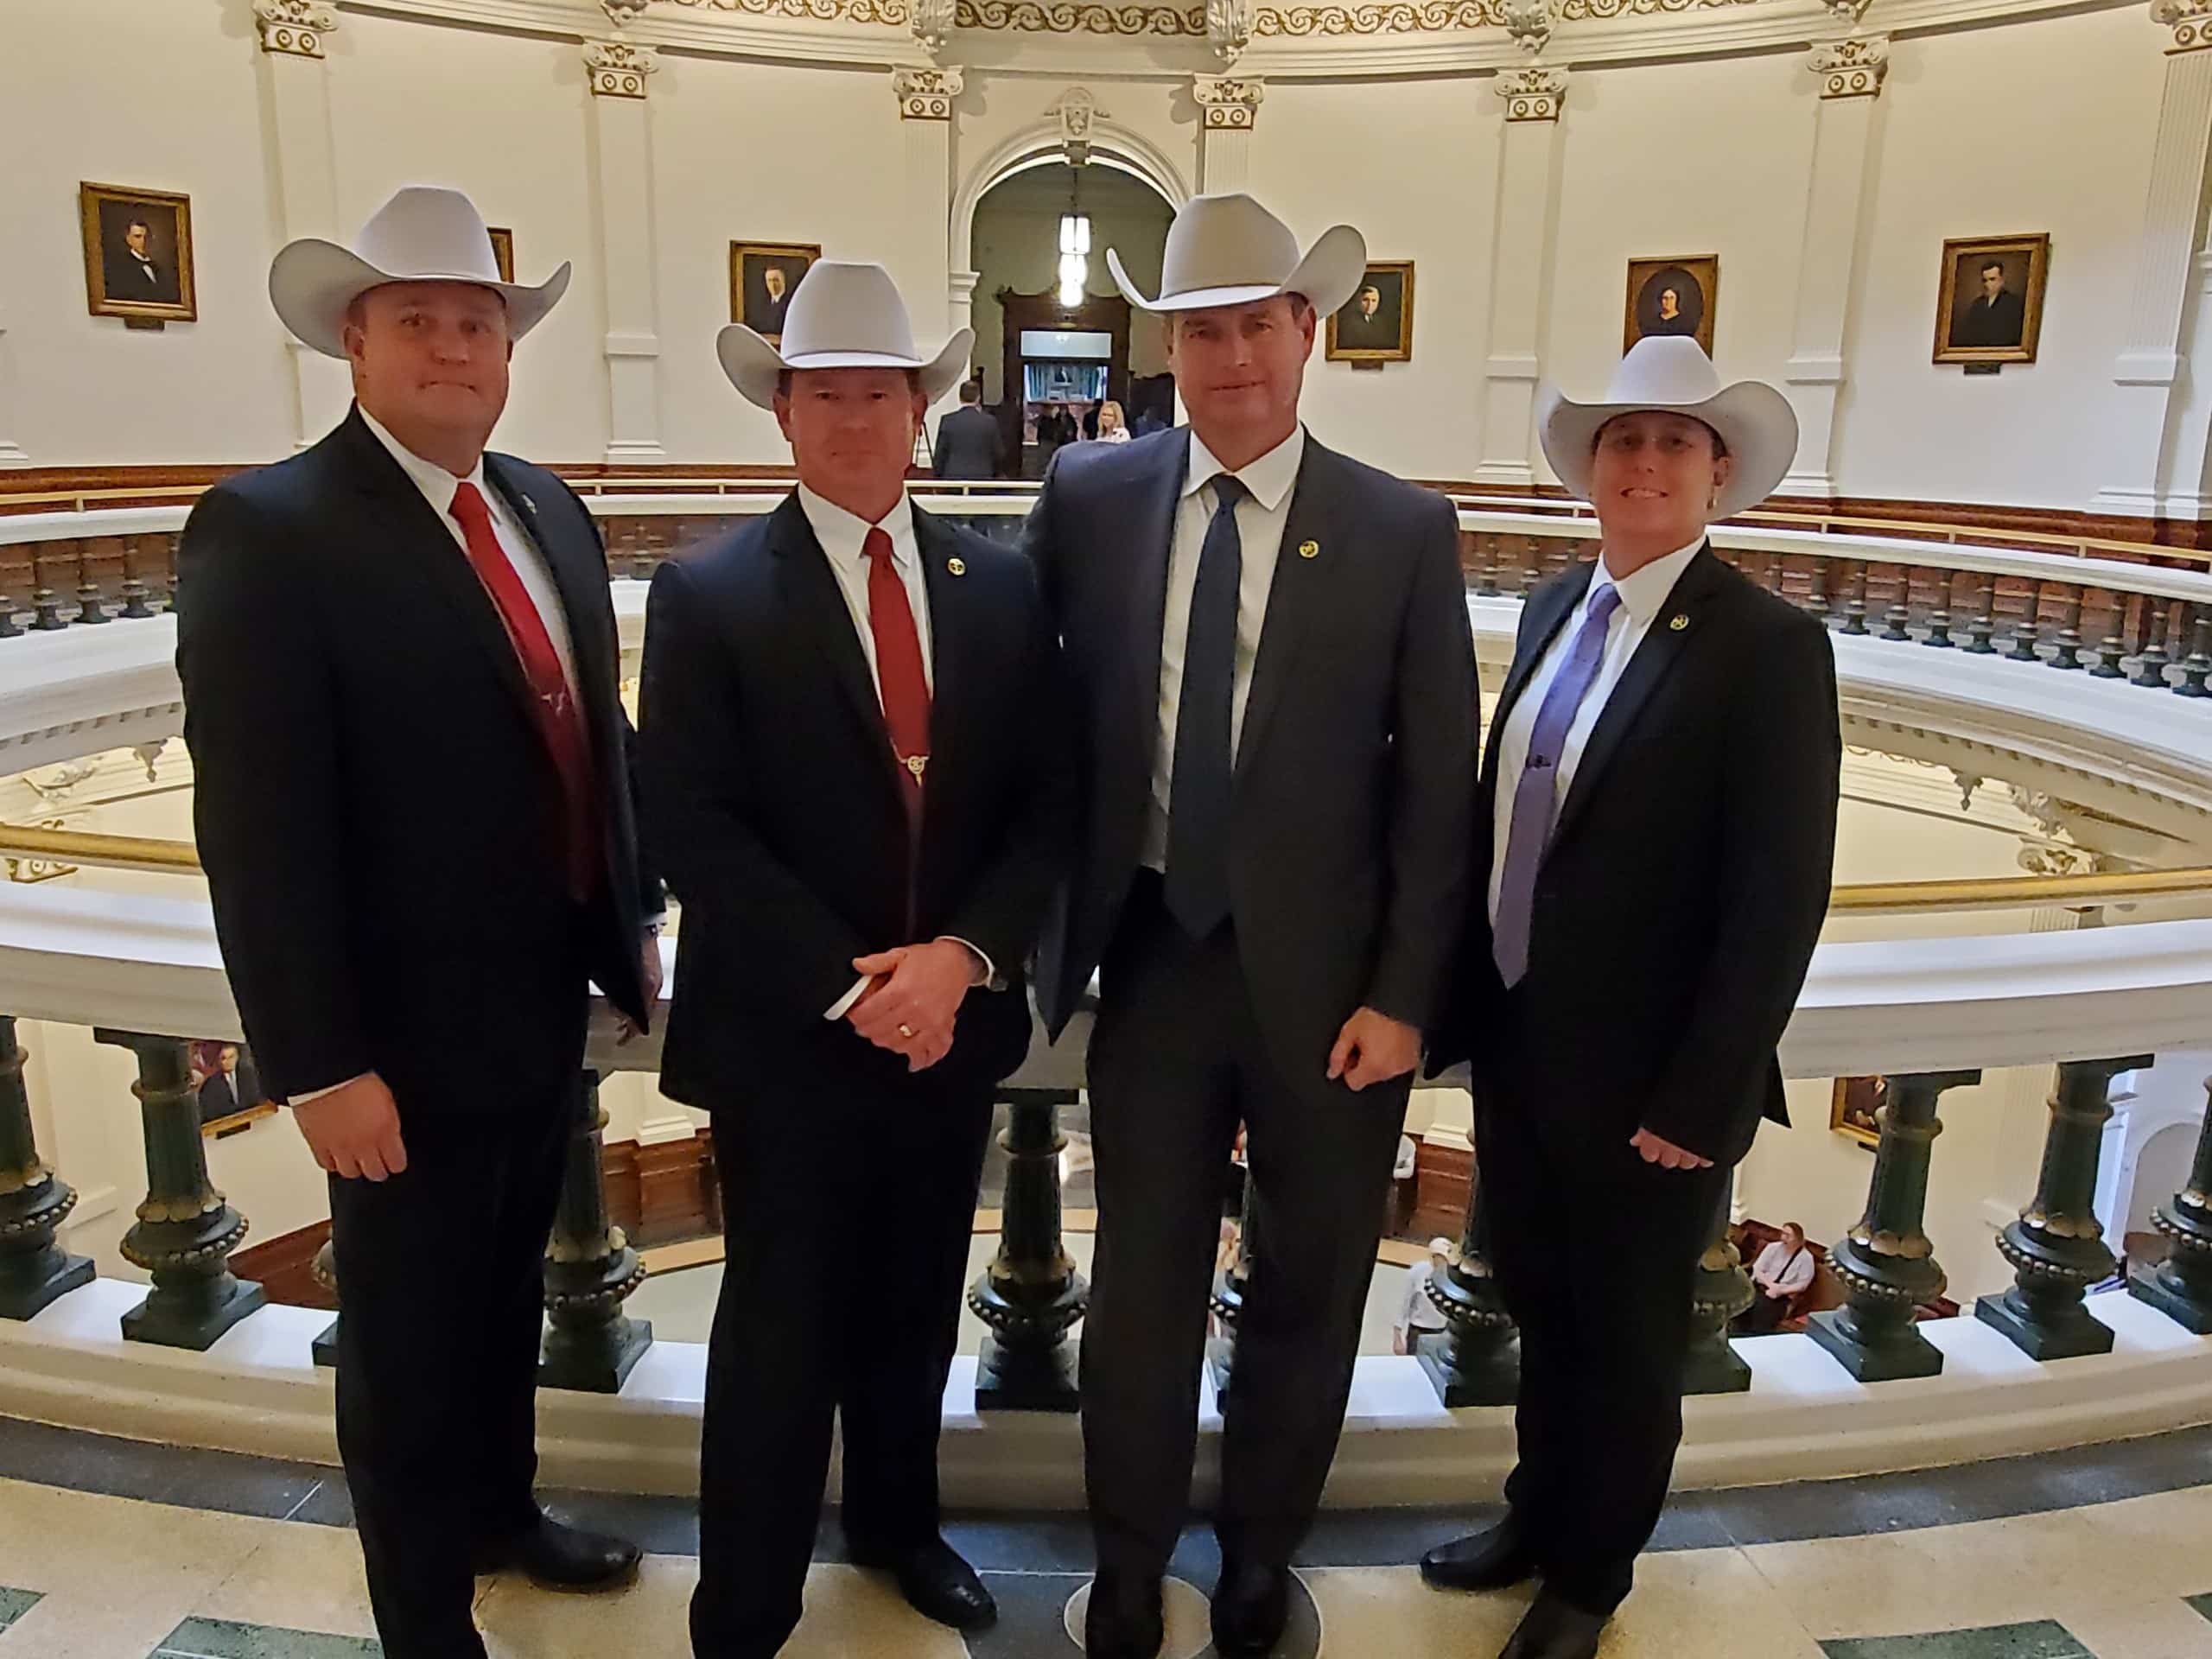 Legislative Recognition of the Texas Rangers Bicentennial - Authentic Texas